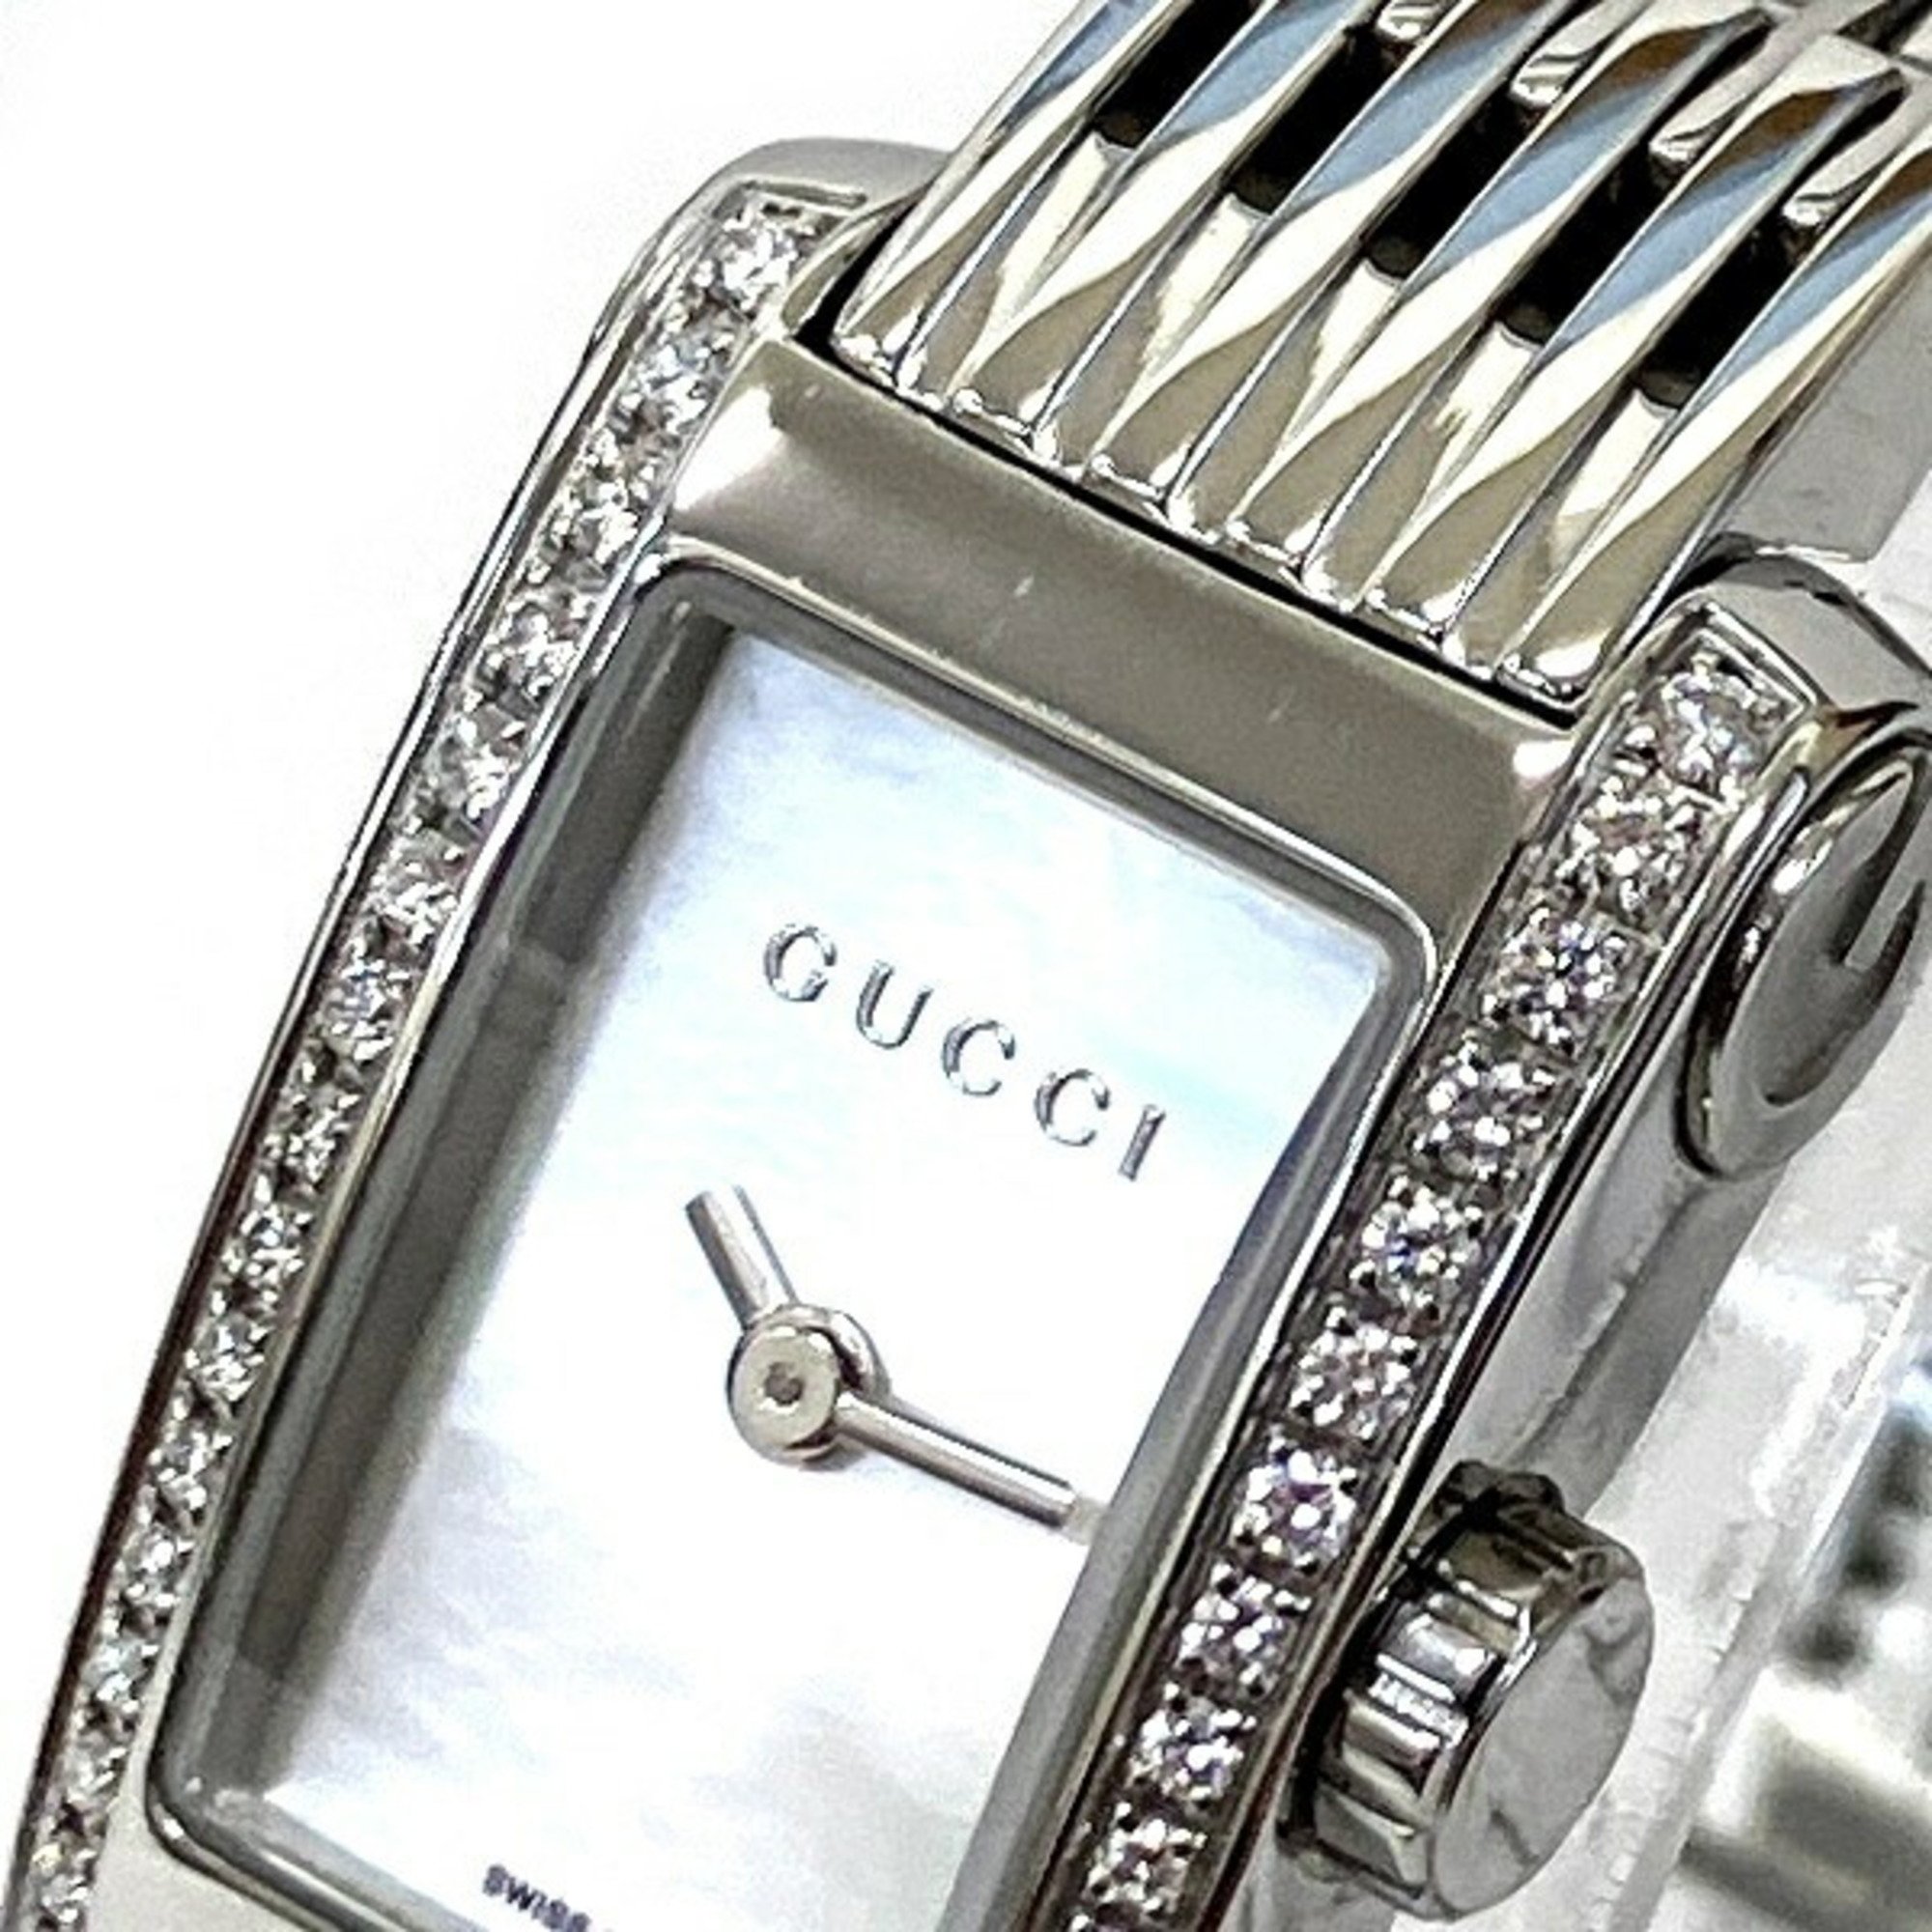 GUCCI G Metro 8600L Quartz Diamond Bezel Watch Ladies